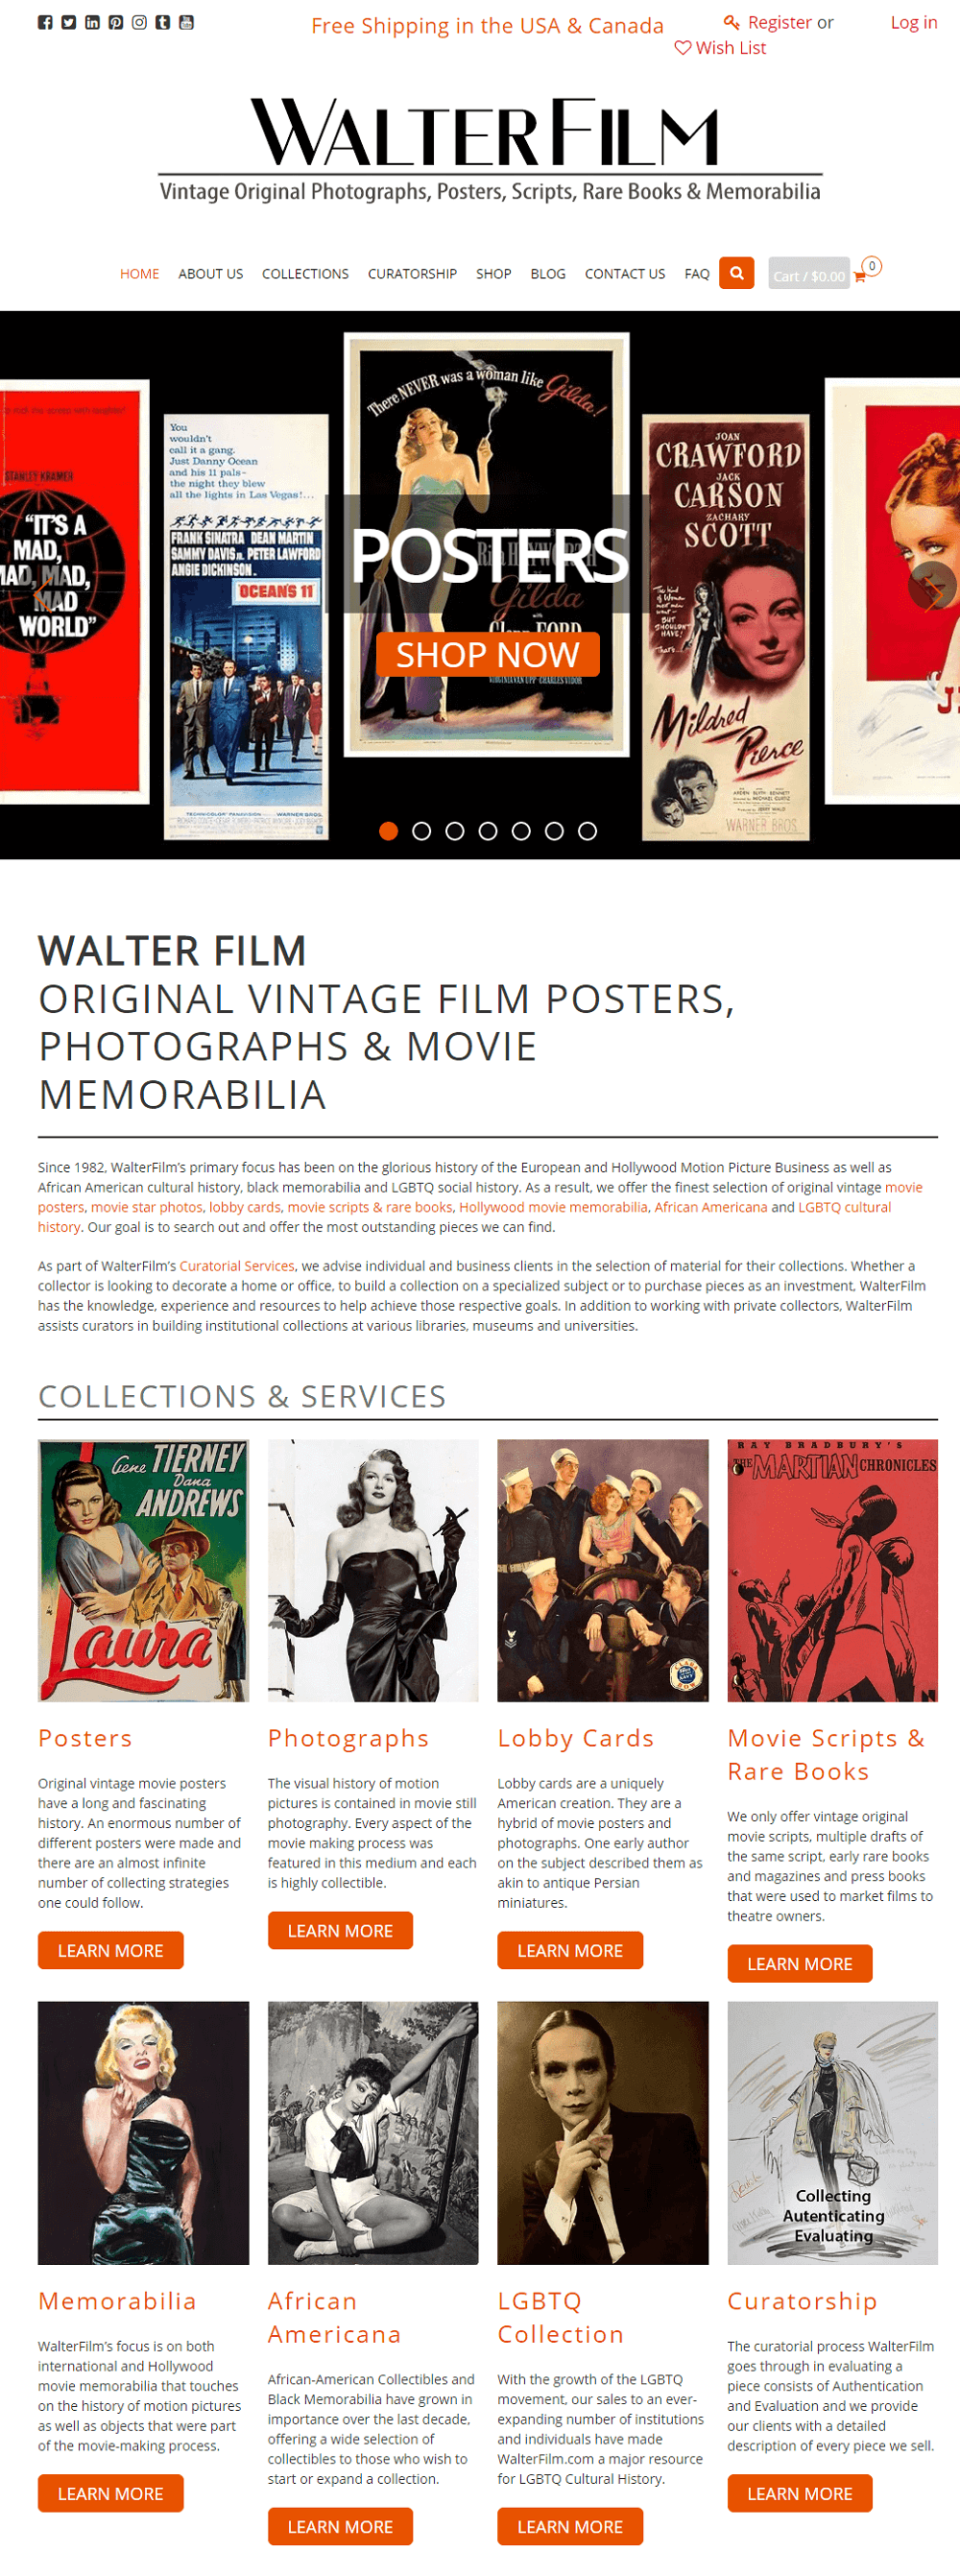 WalterFilm Home Page | VIEWS Digital Marketing